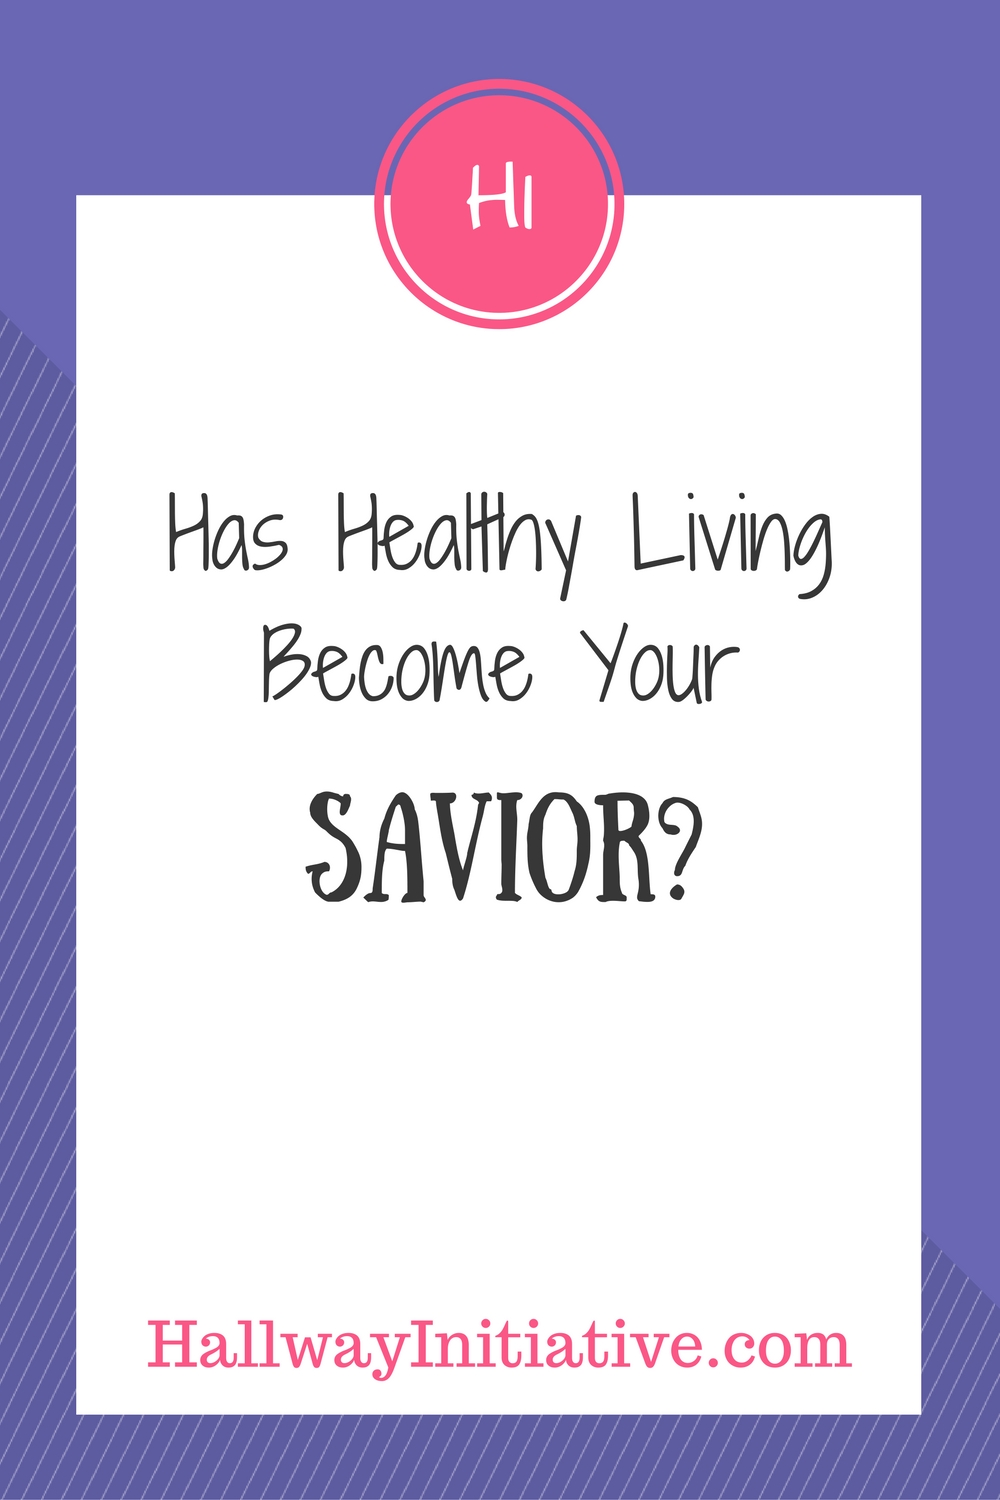 Has healthy living become your savior?